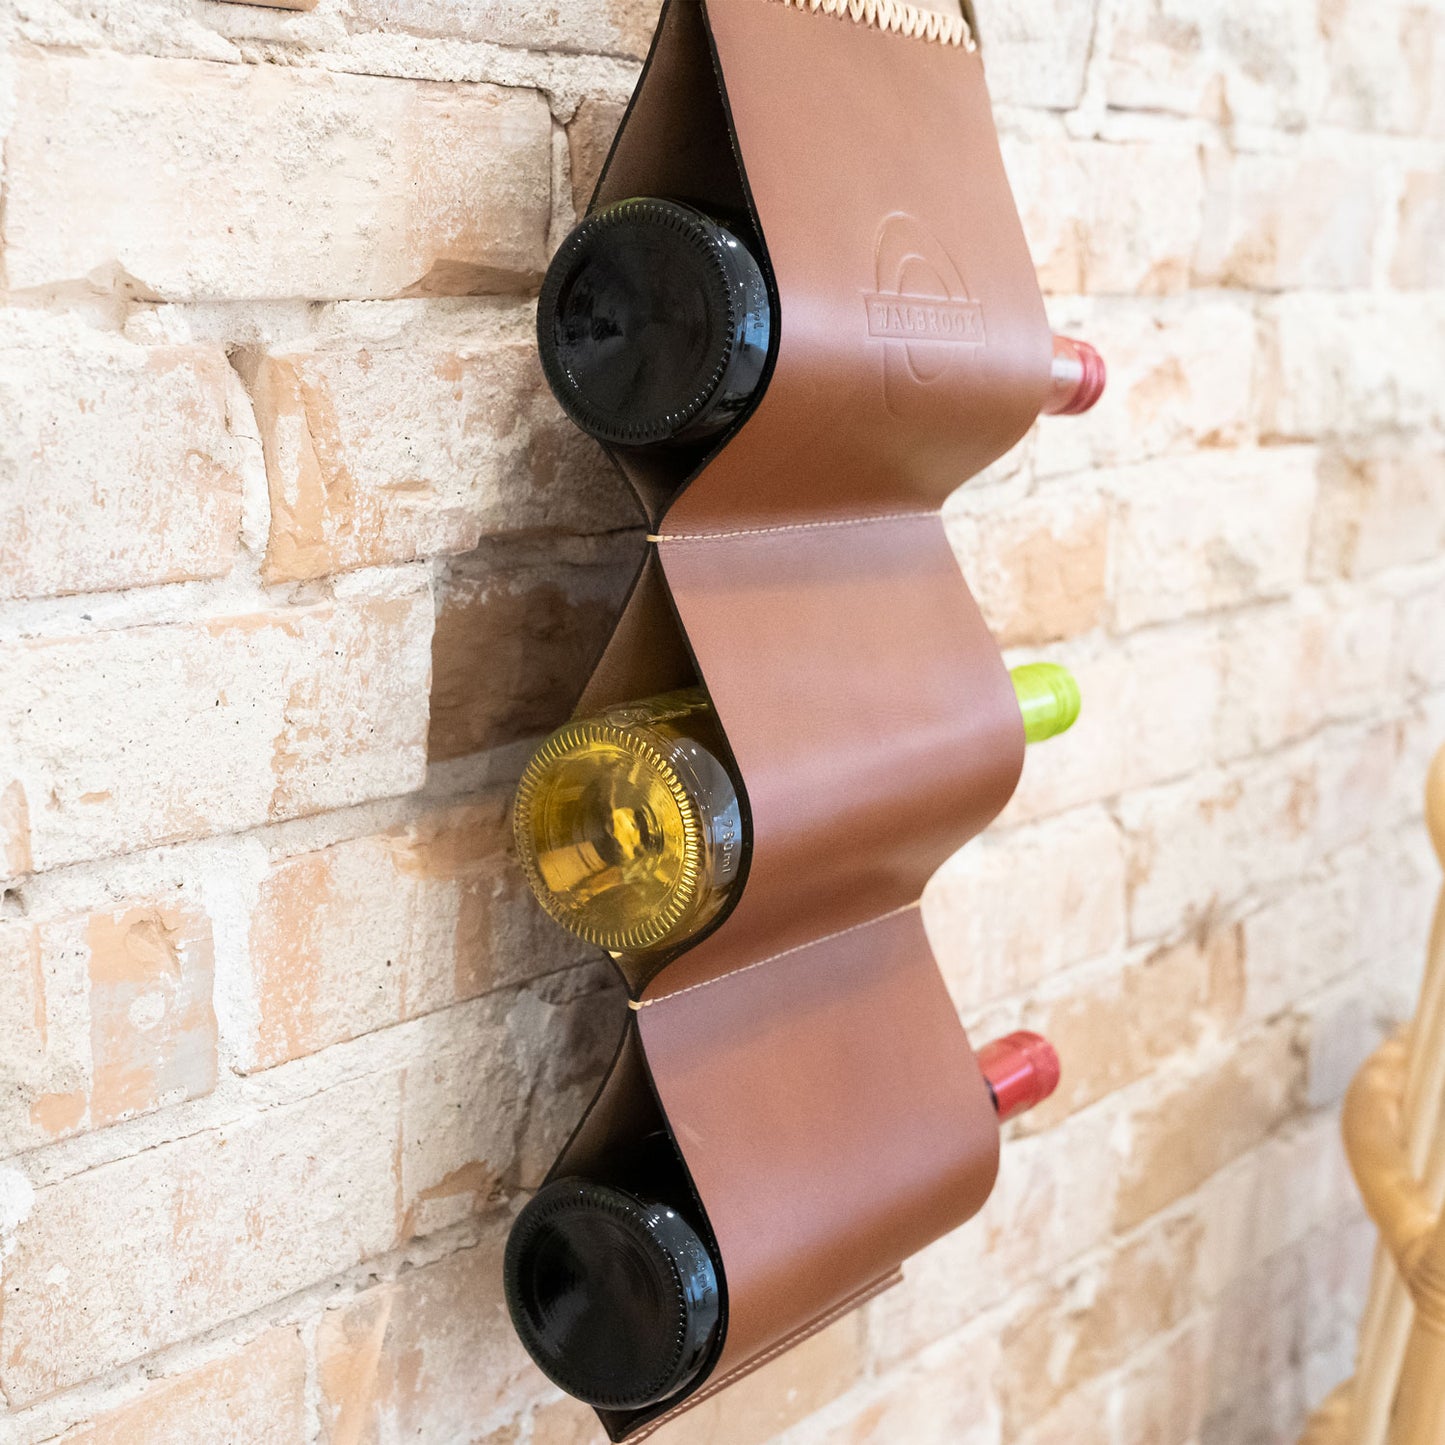 hanging leather wine rack